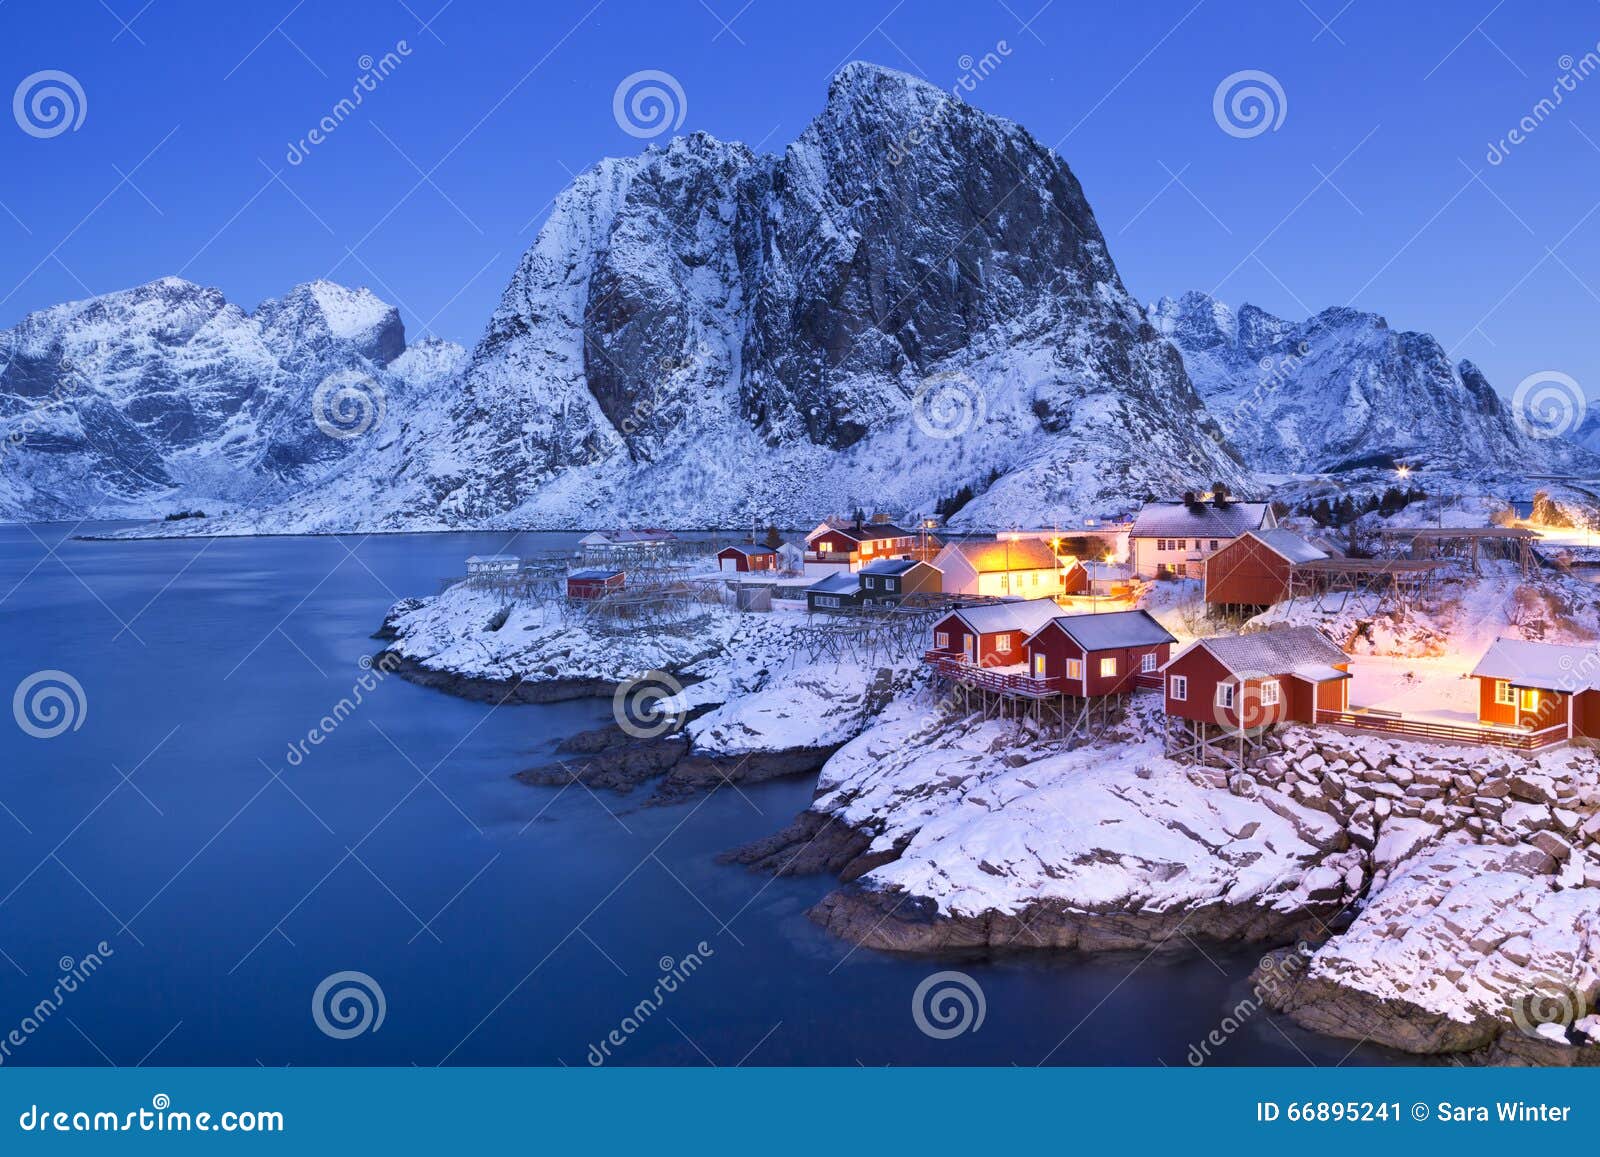 norwegian fisherman's cabins on the lofoten in winter